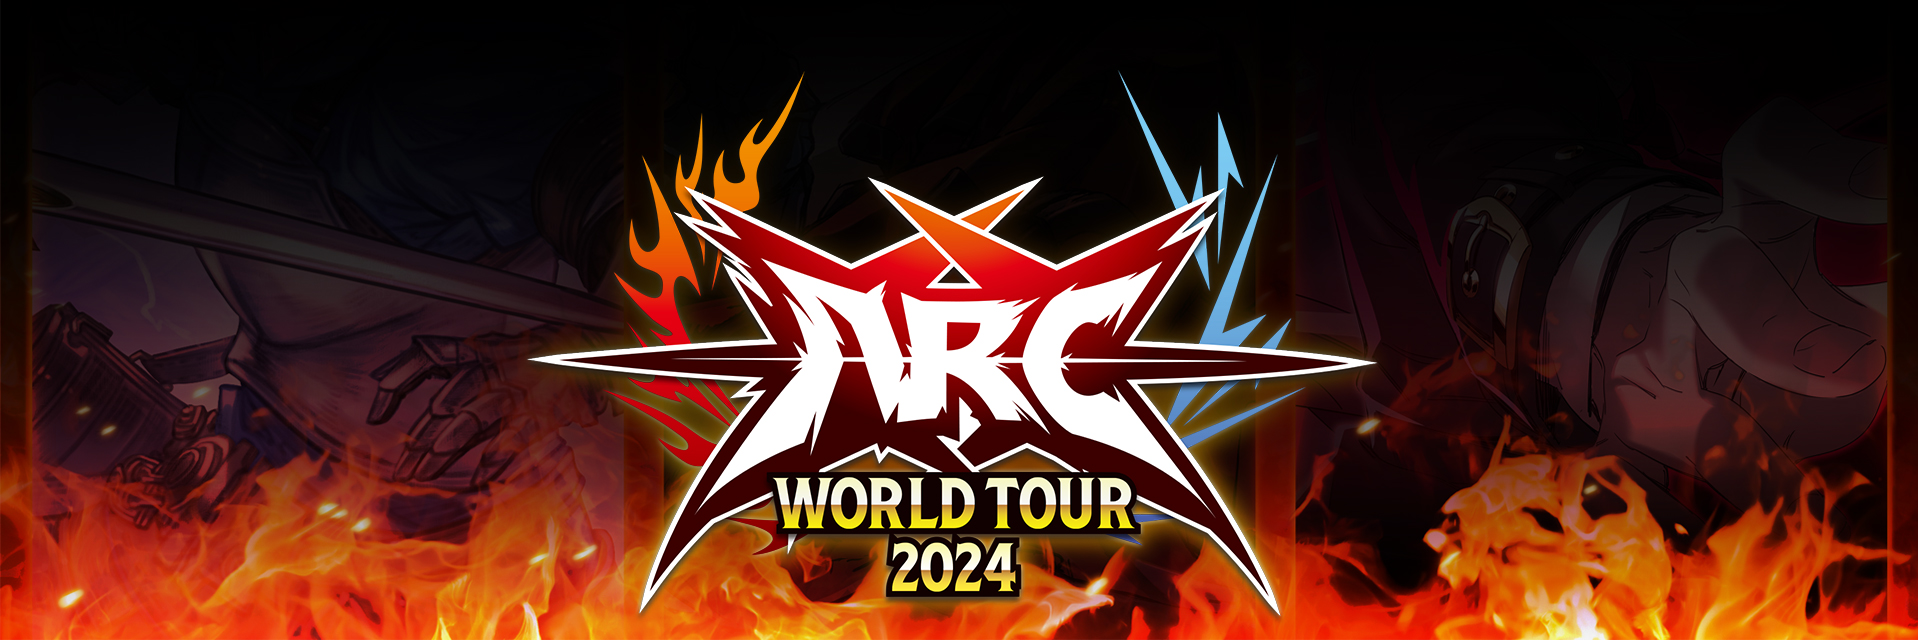 ARC WORLD TOUR 2024